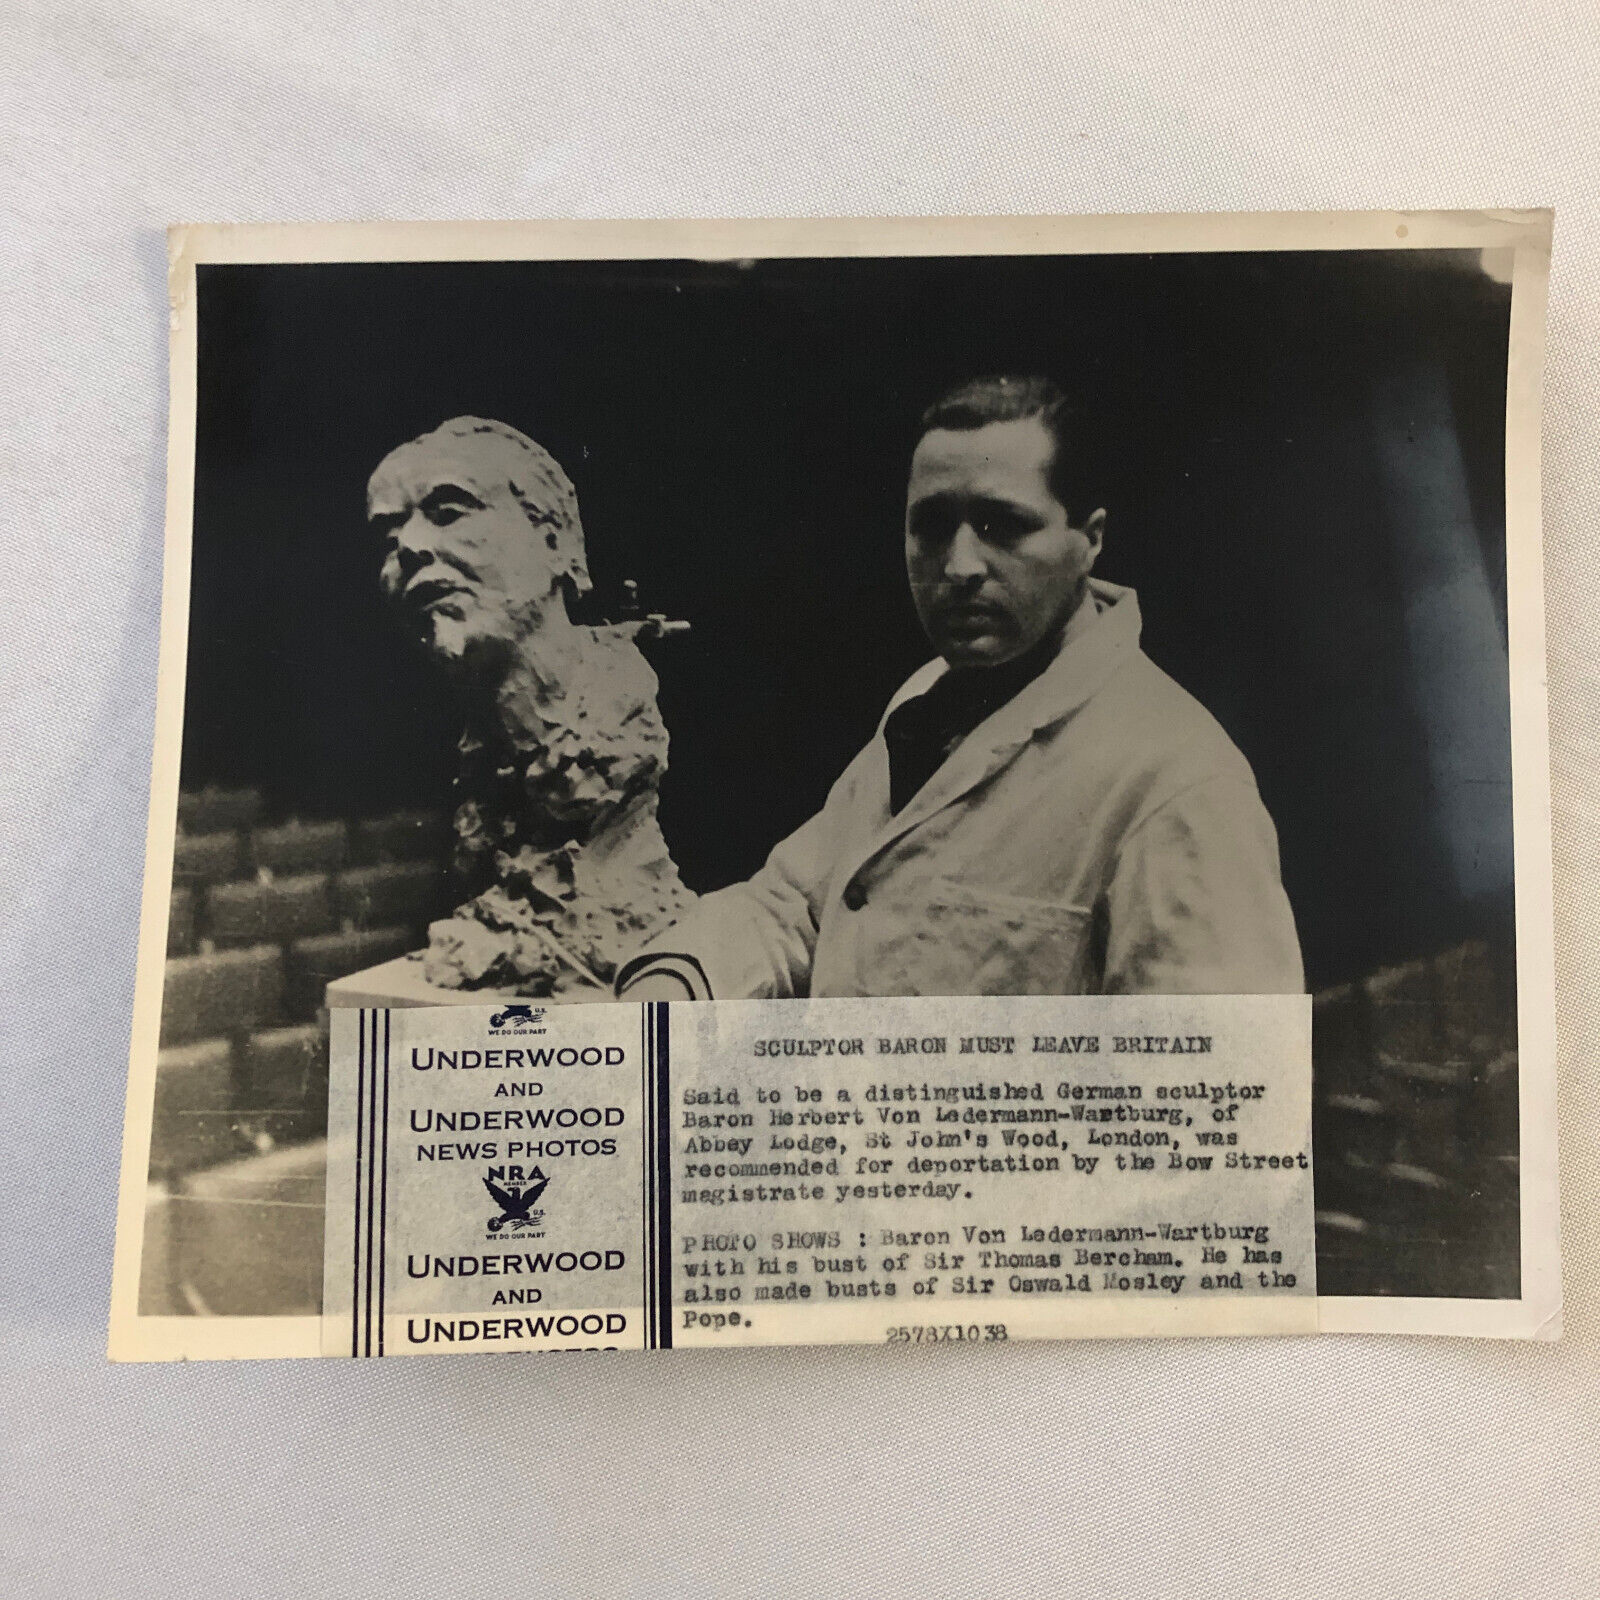 Press Photo Photograph German Sculptor Deported Britain Baron Von Ledermann